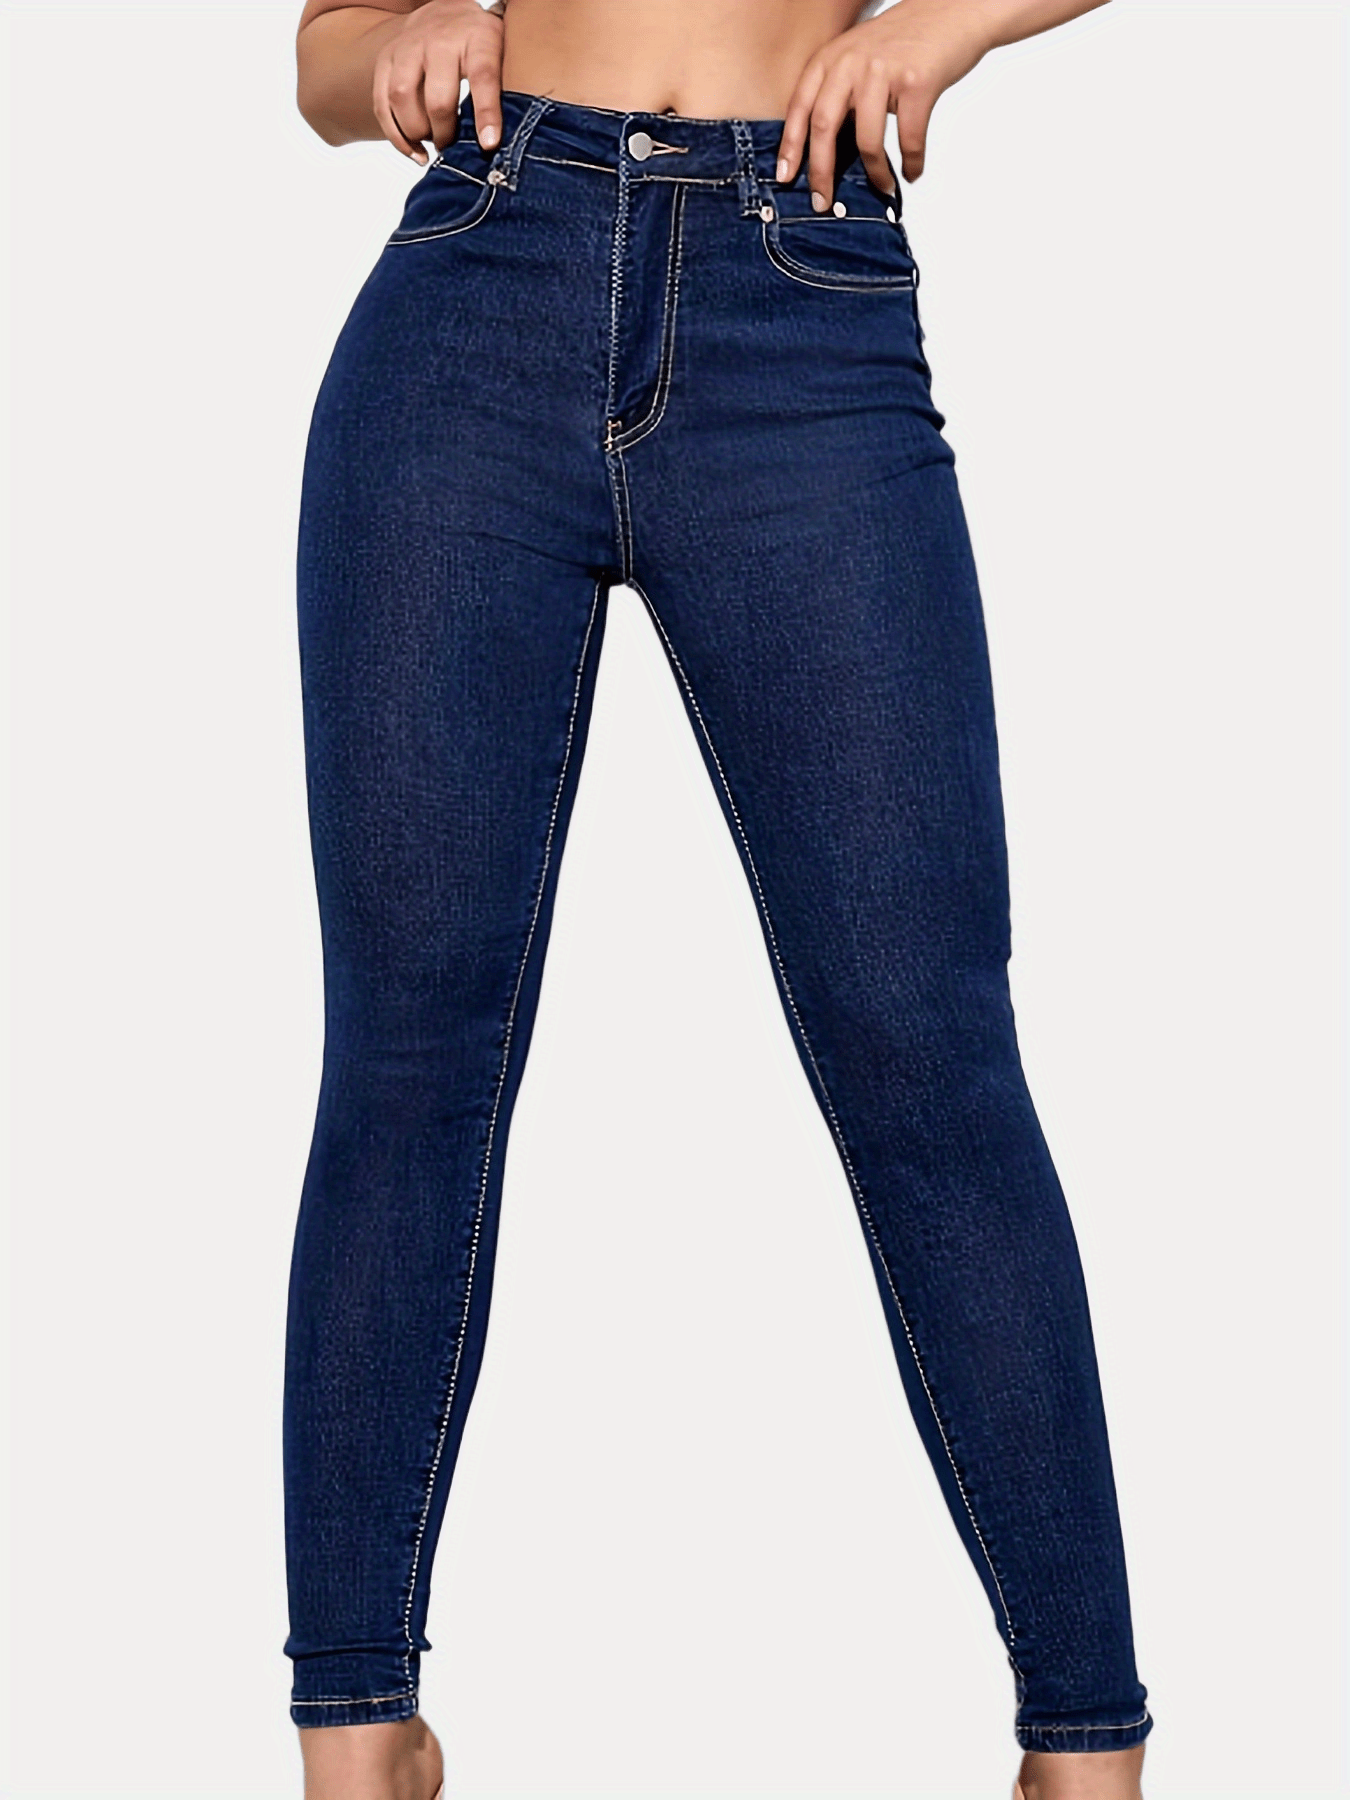 GENERICO Jeans ajustados de cintura alta para mujer- azul oscuro